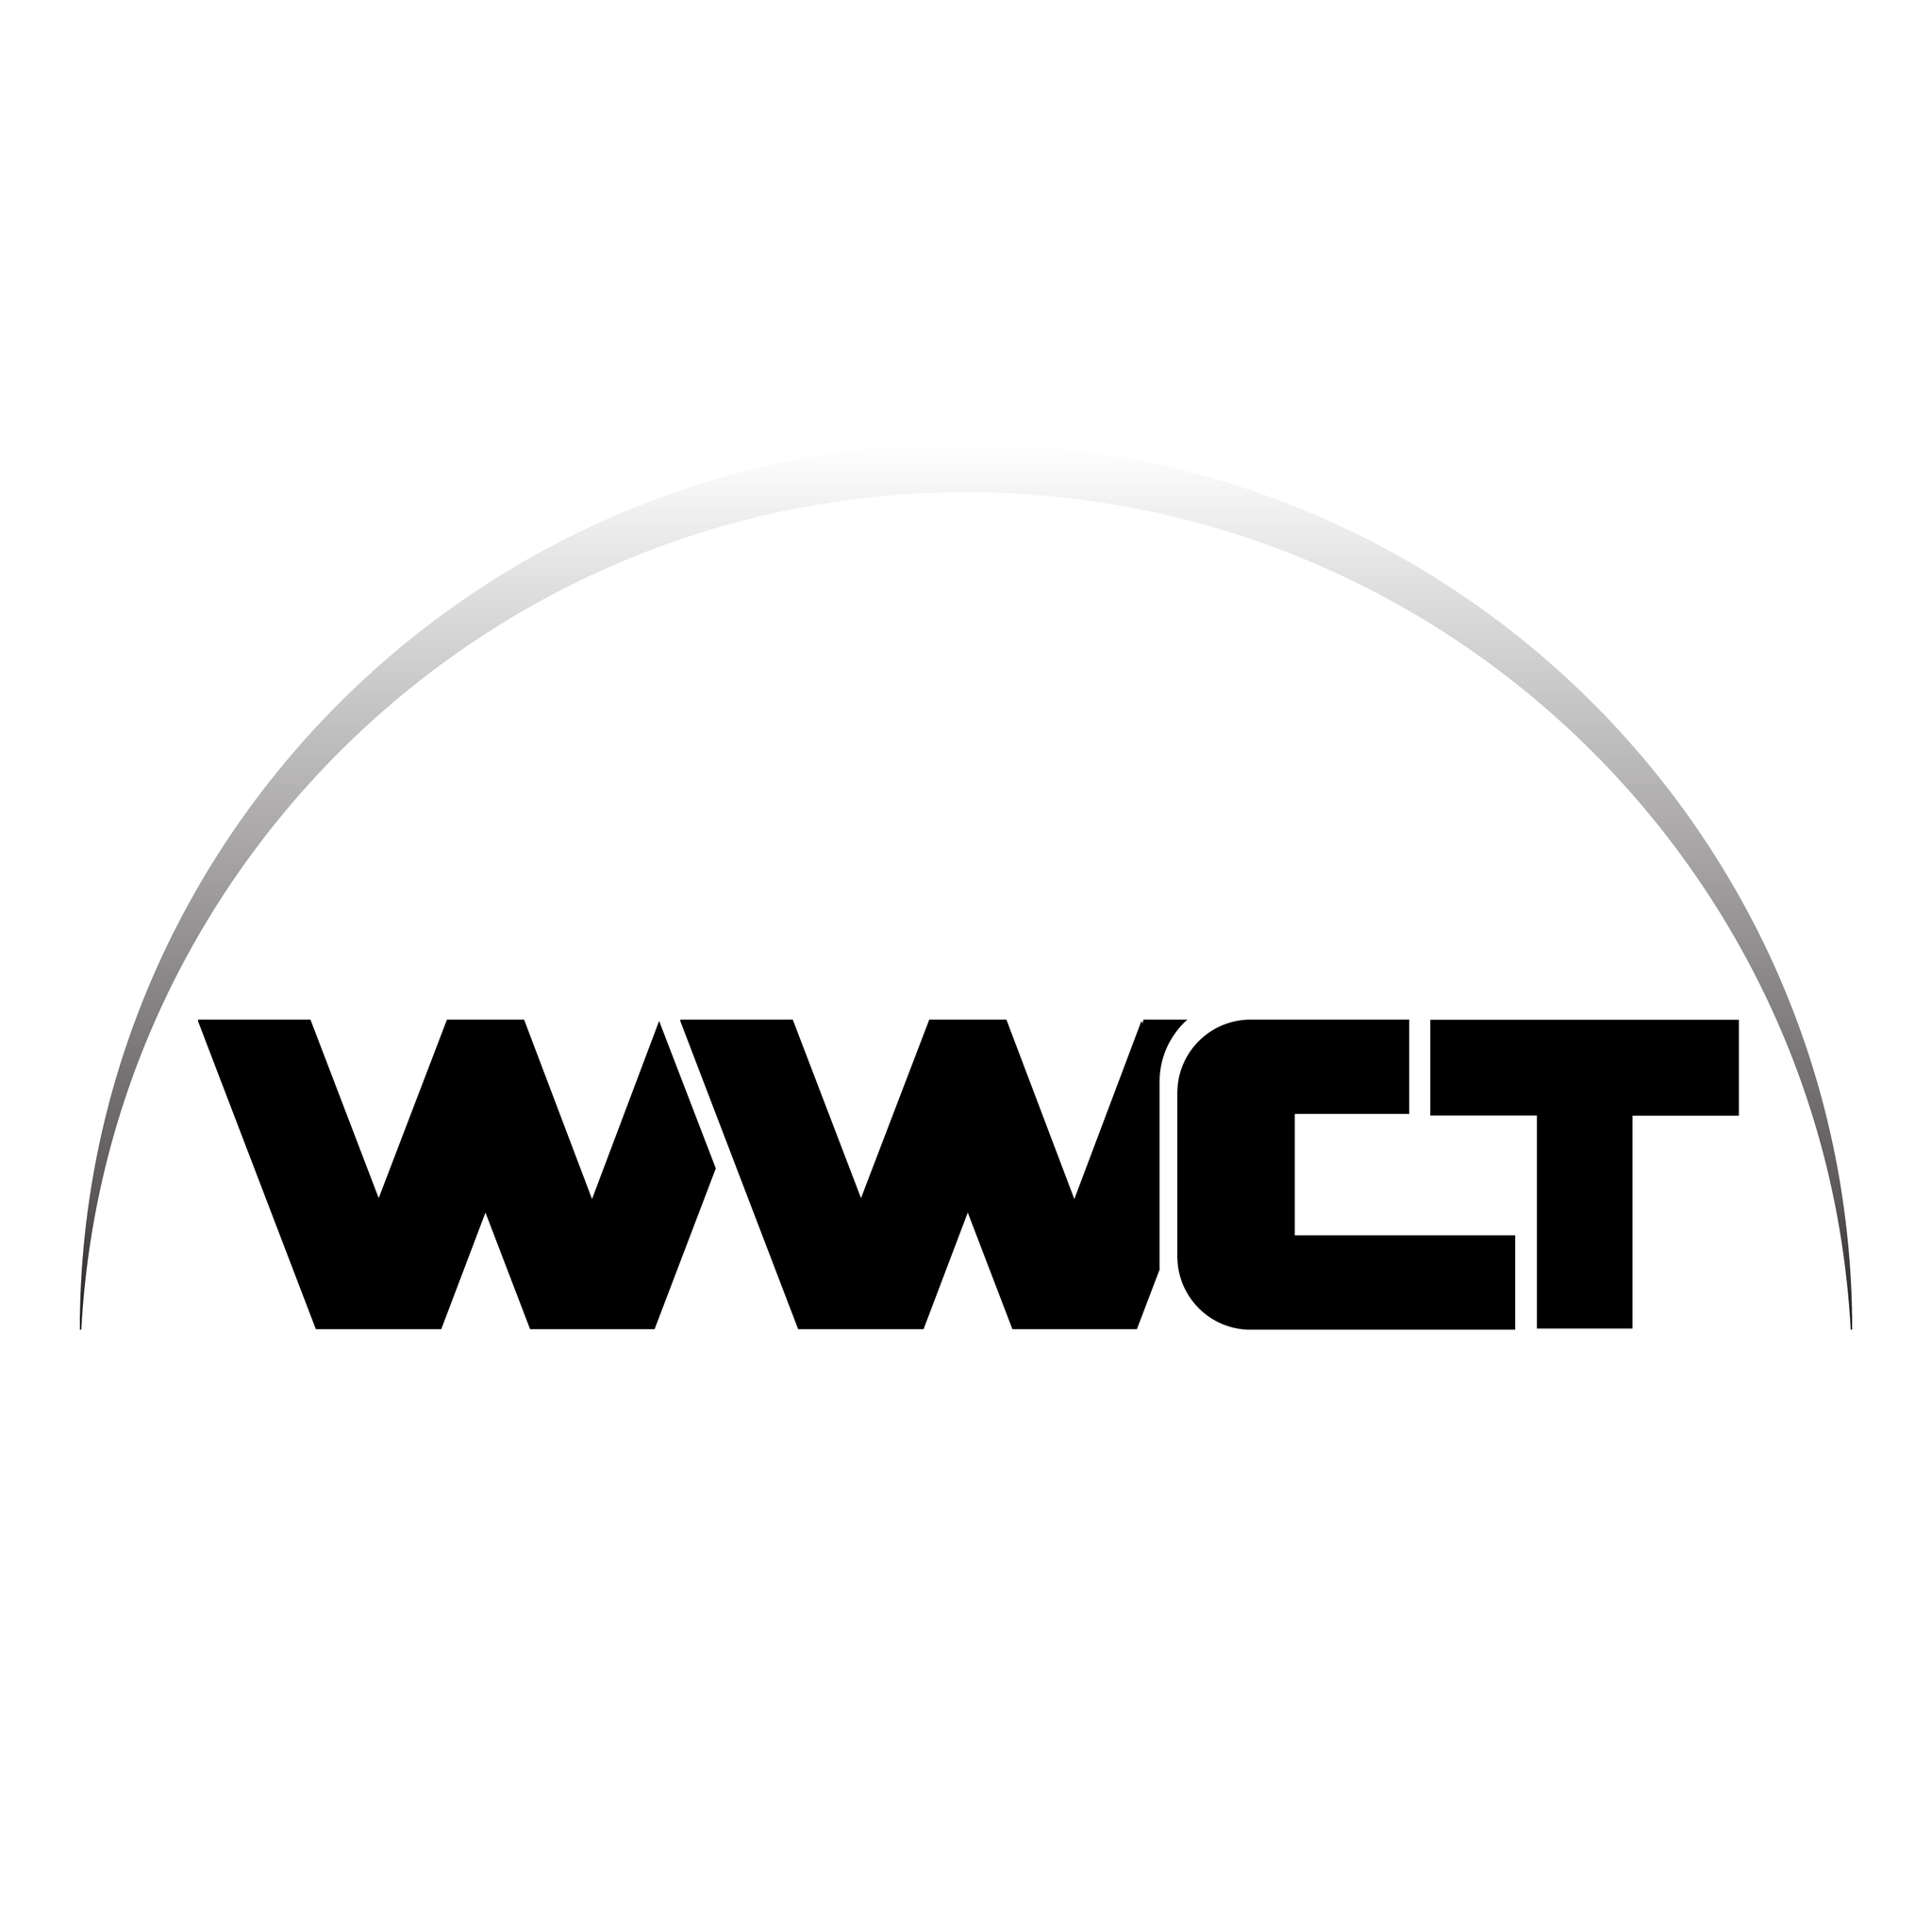 World Wave Culture Technology logo